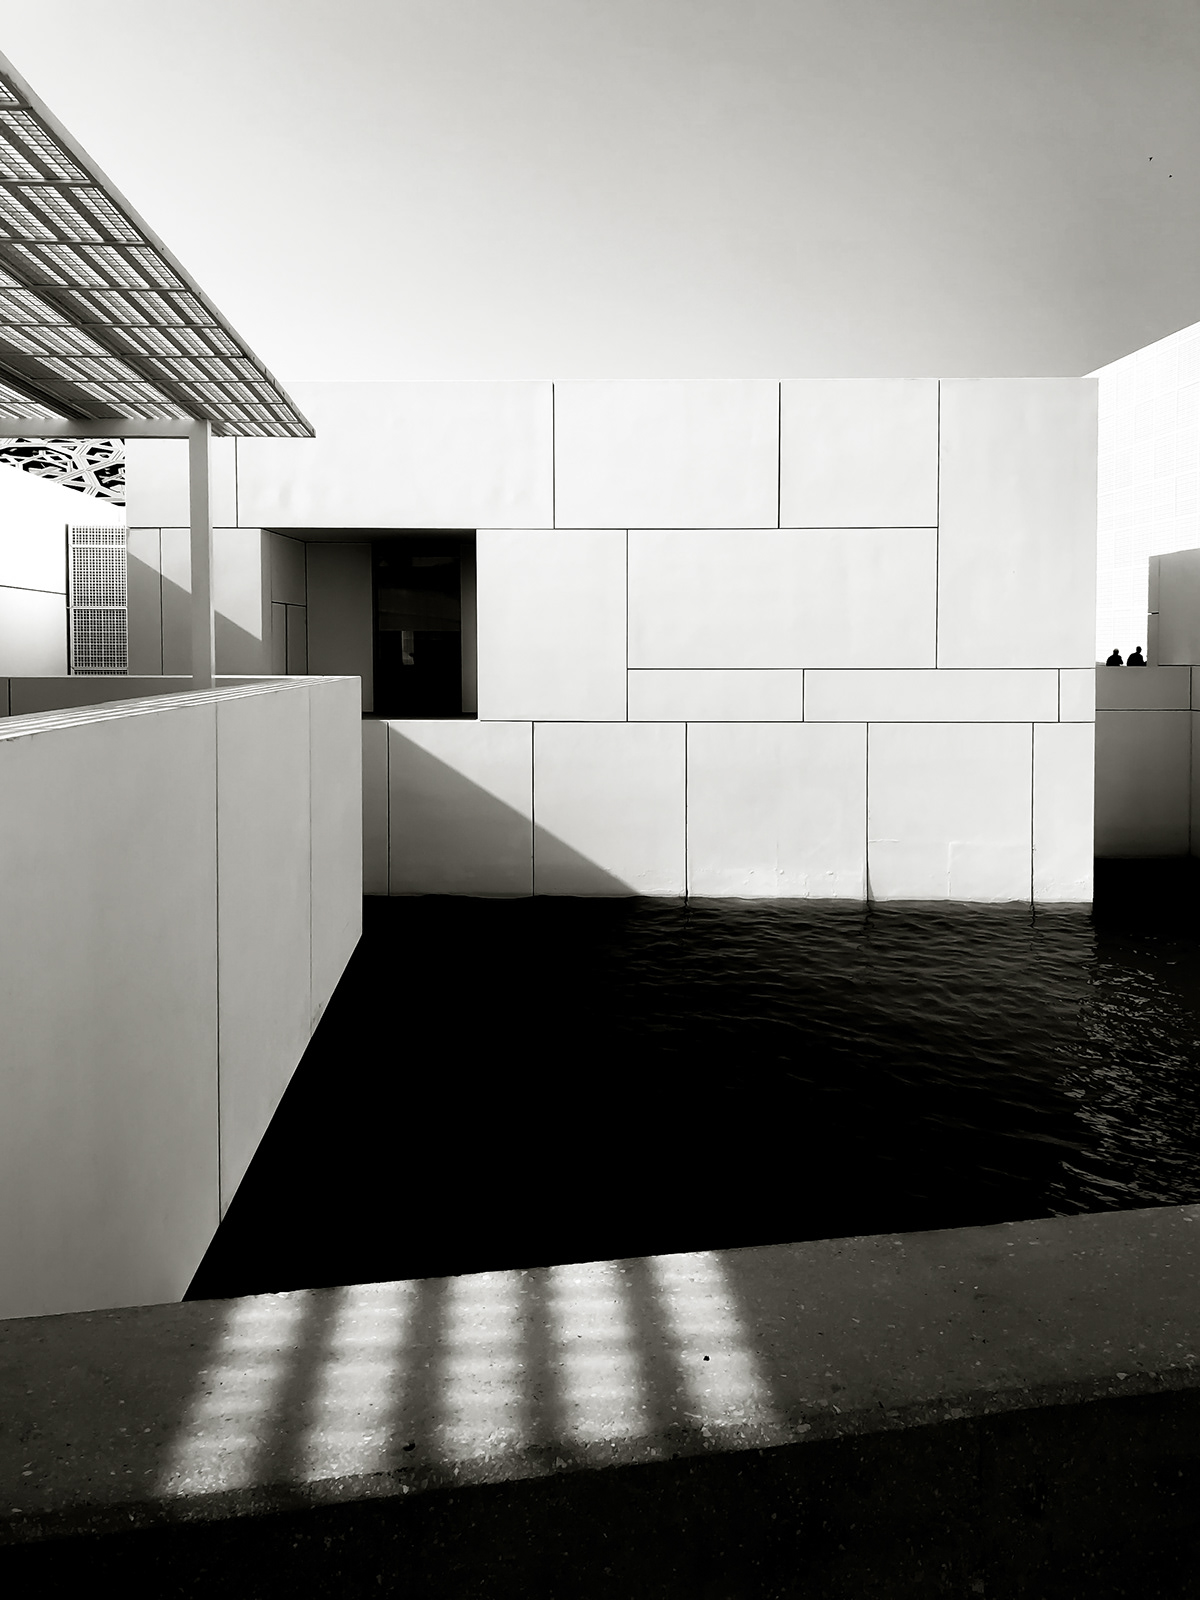 photograph minimal photography black and white street photograph architecture minimal